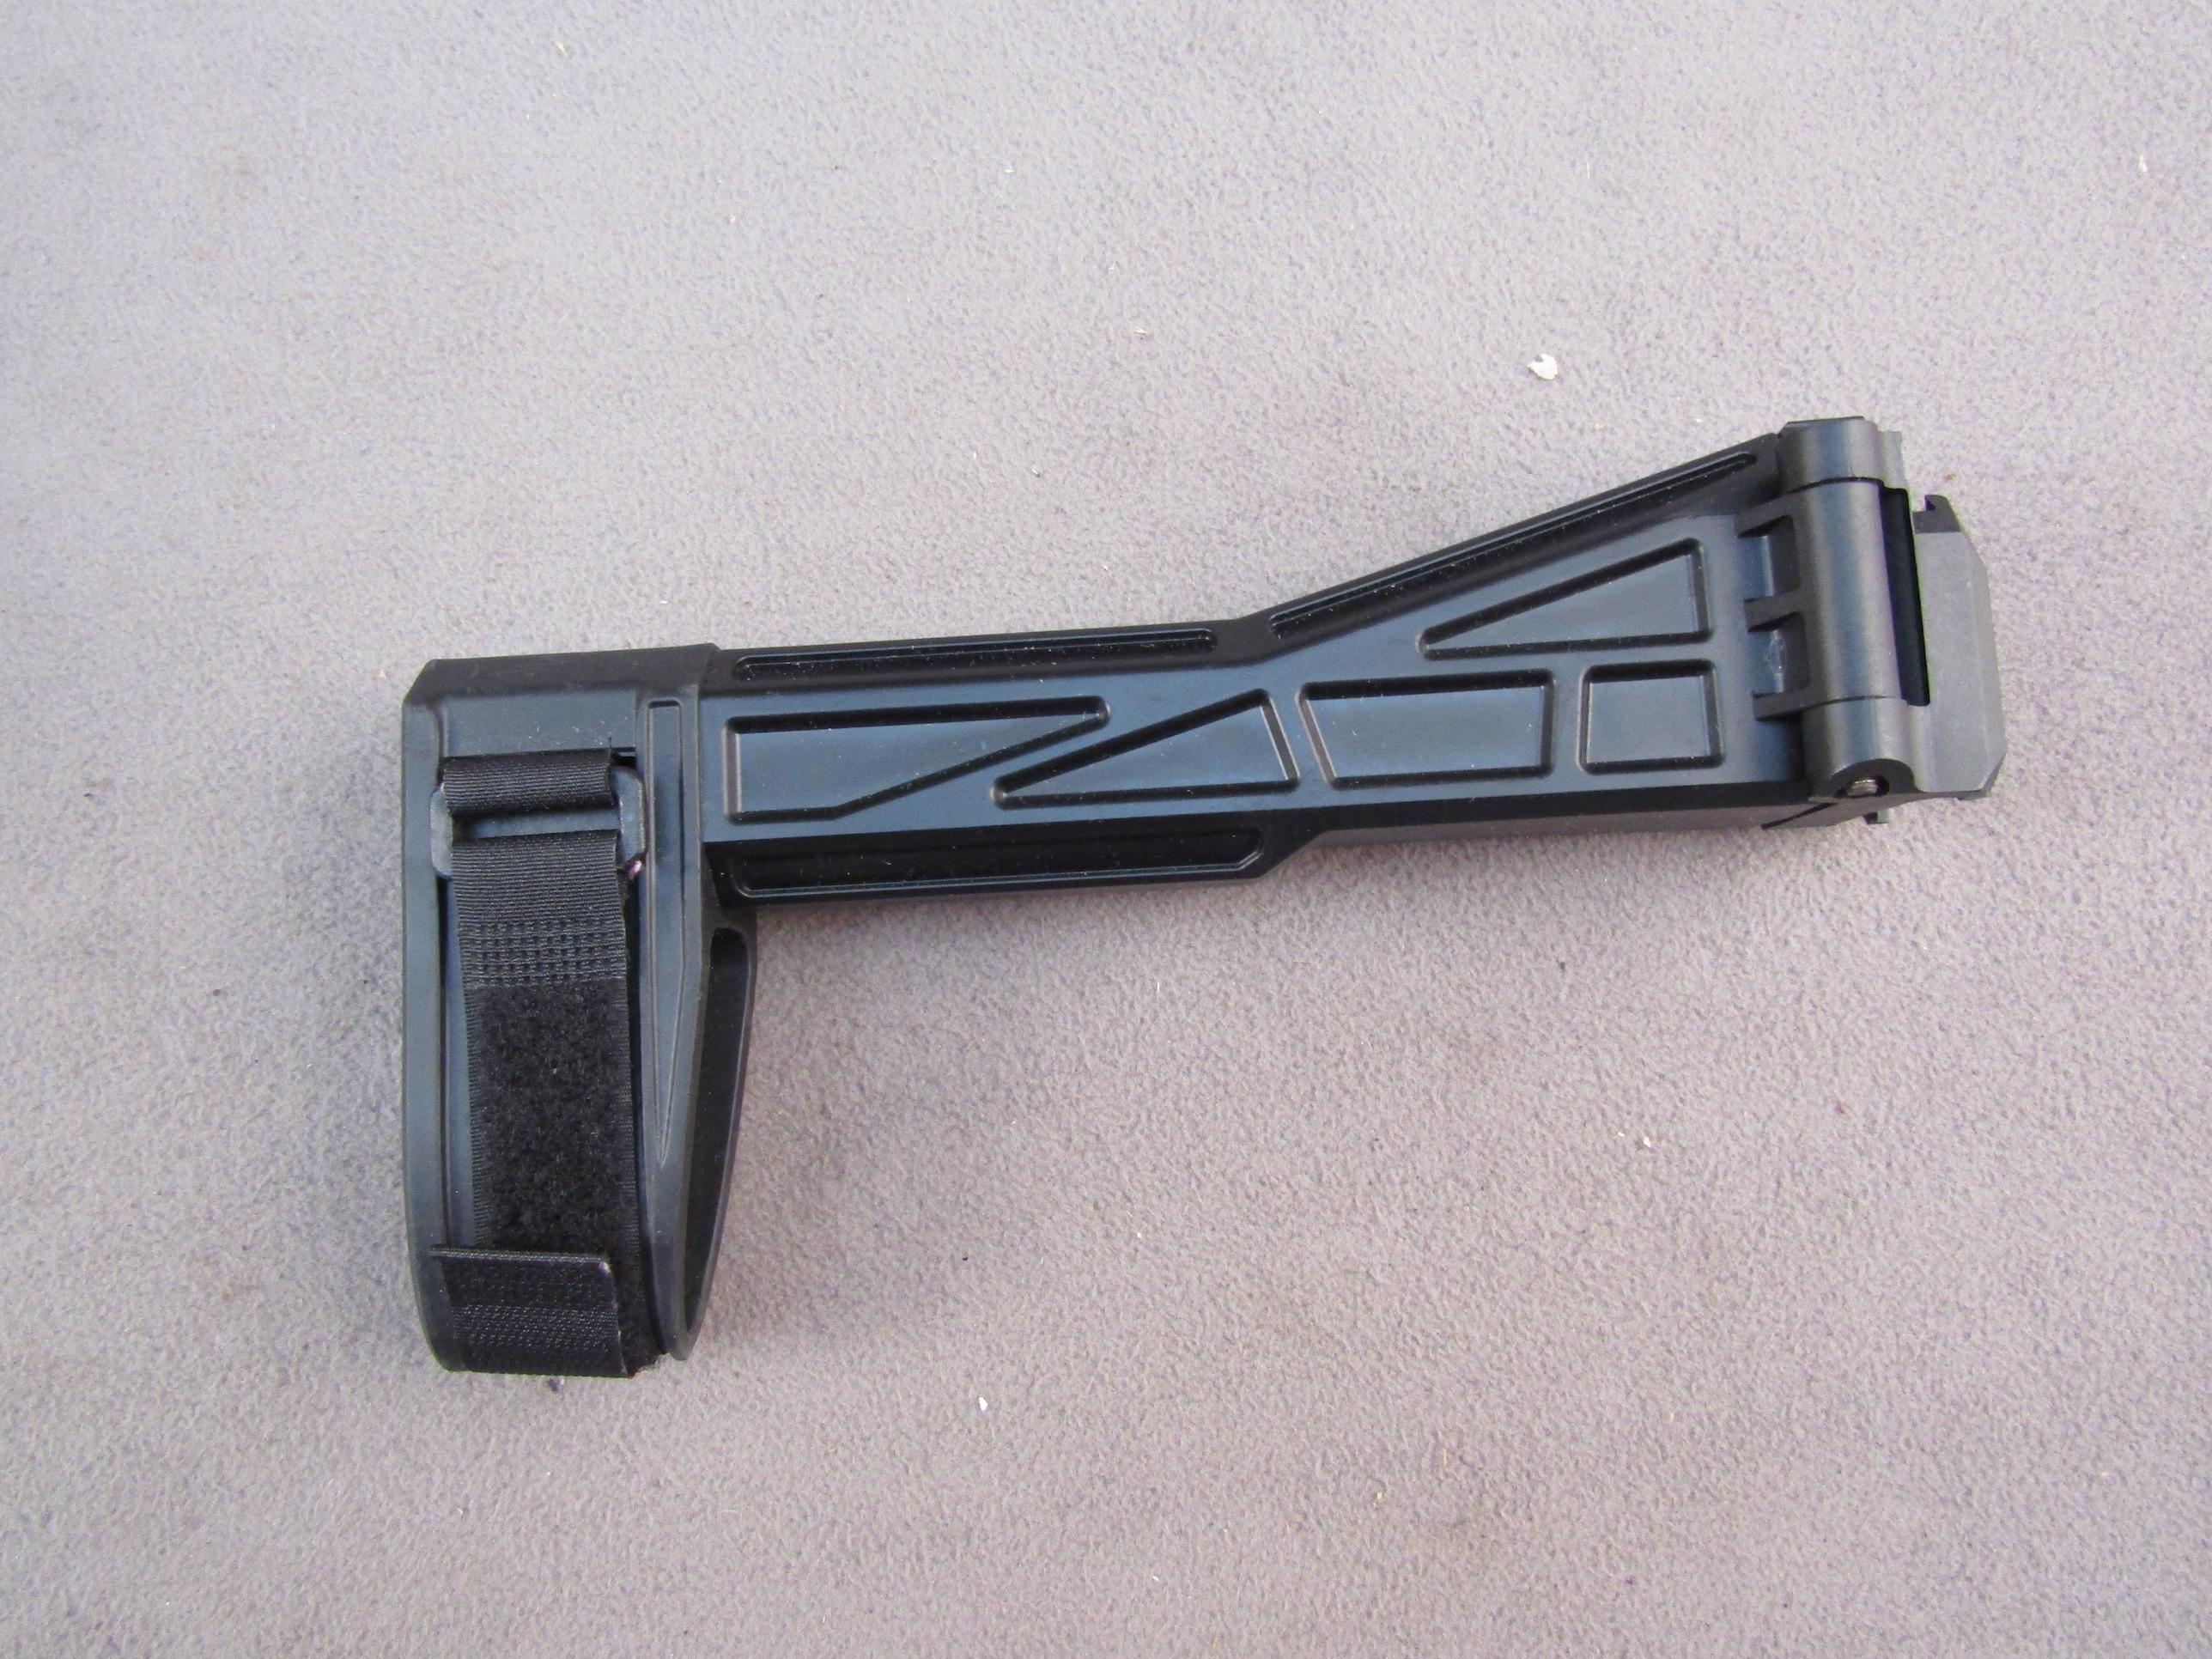 handgun: CZ Model Scorpion, Semi-Auto Pistol, 9x19, 20 shot, 7" barrel, S#F121097